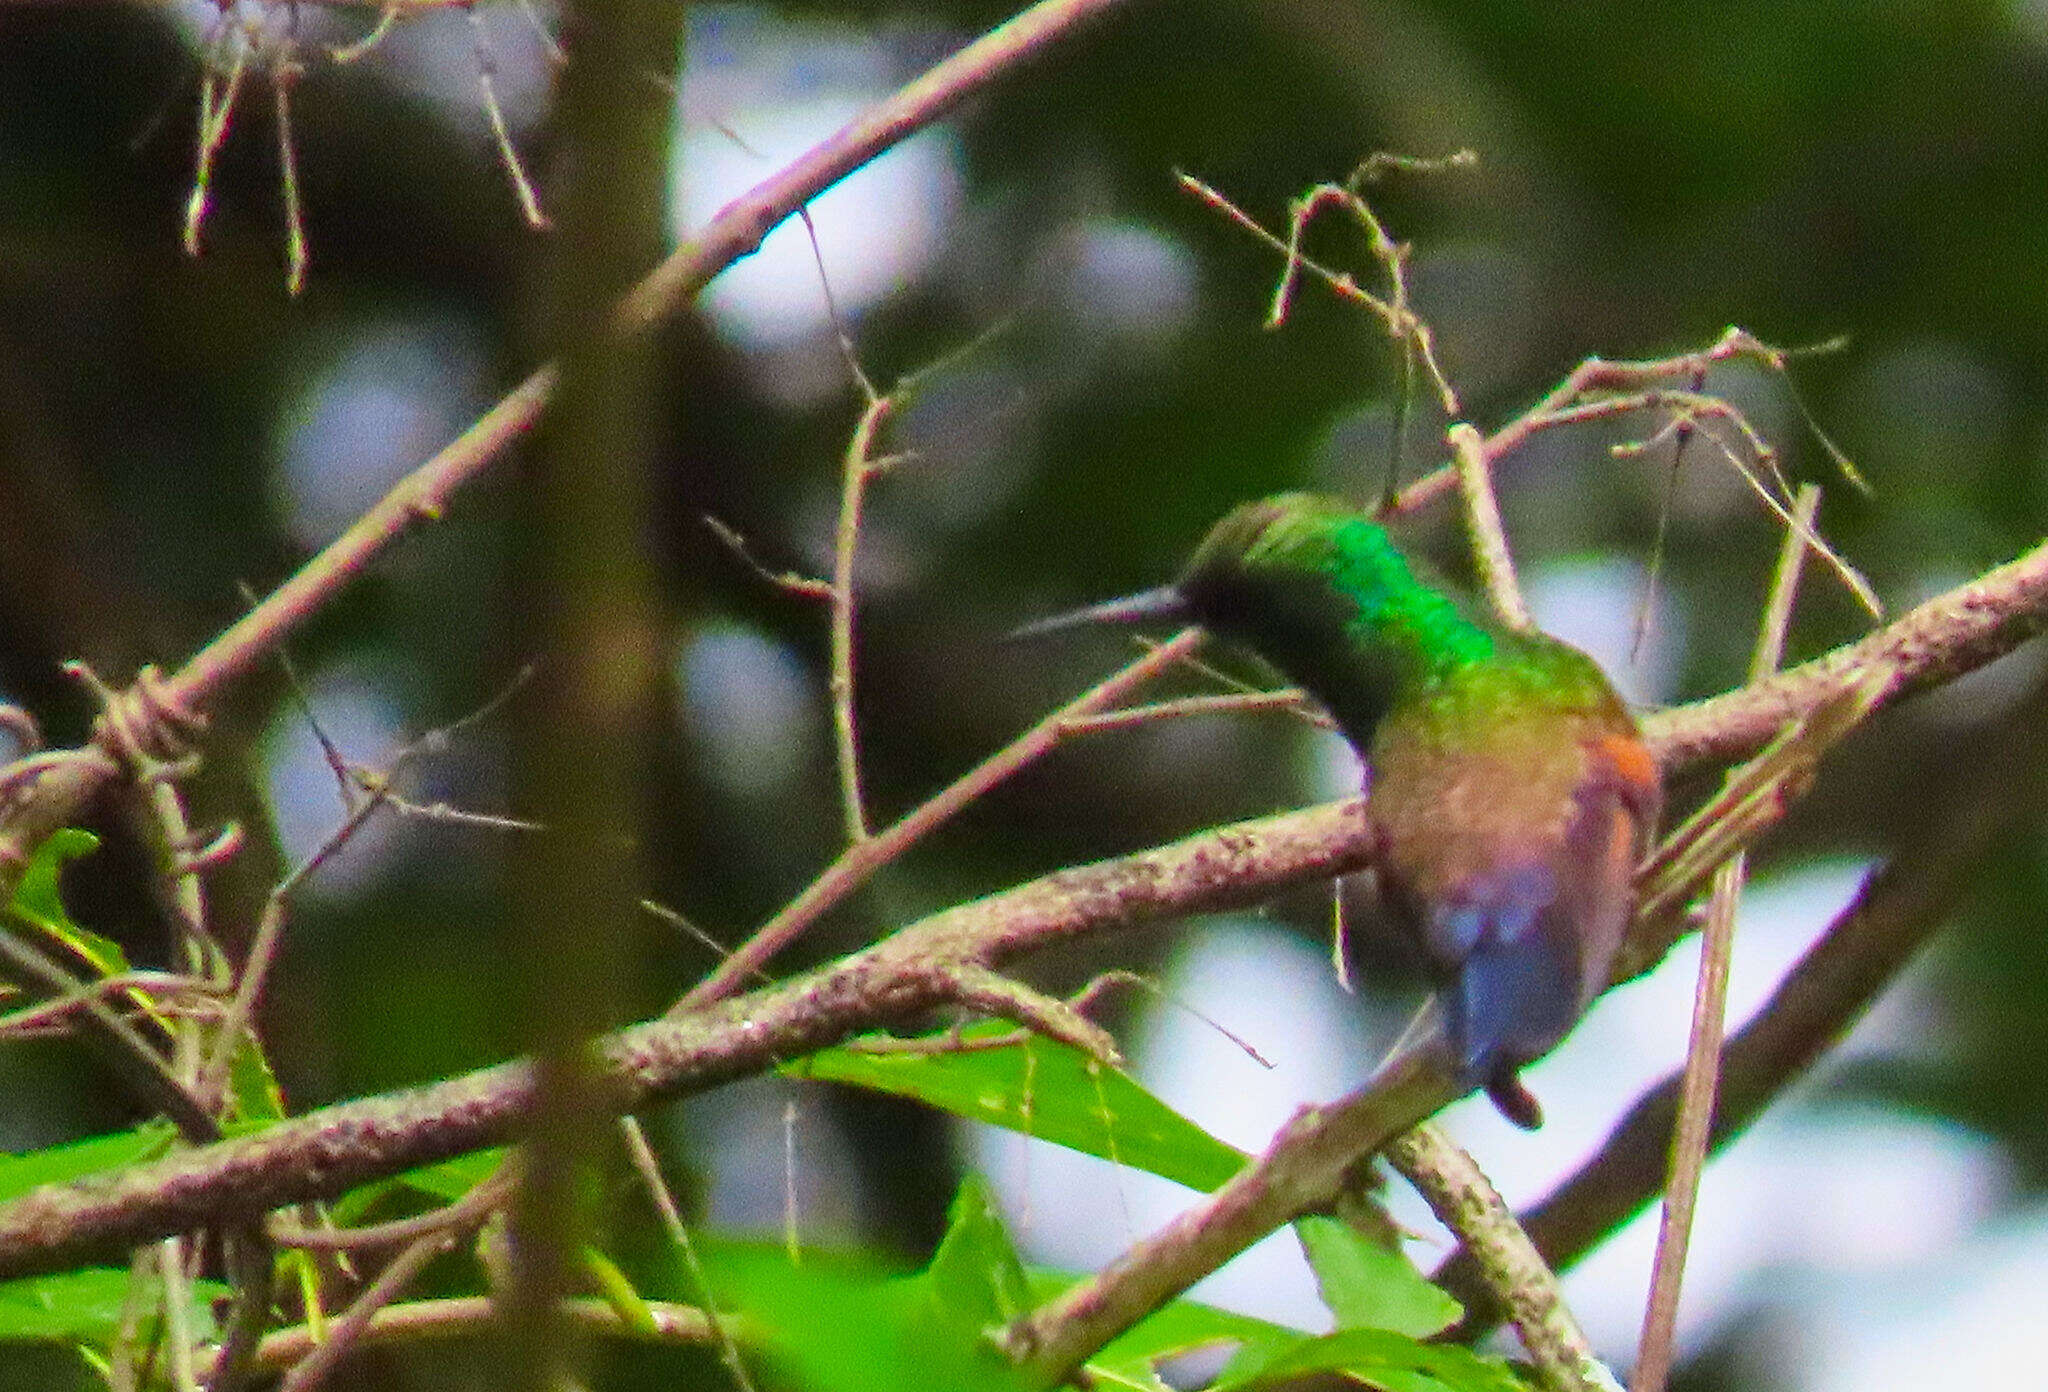 Image of Blue-tailed Hummingbird